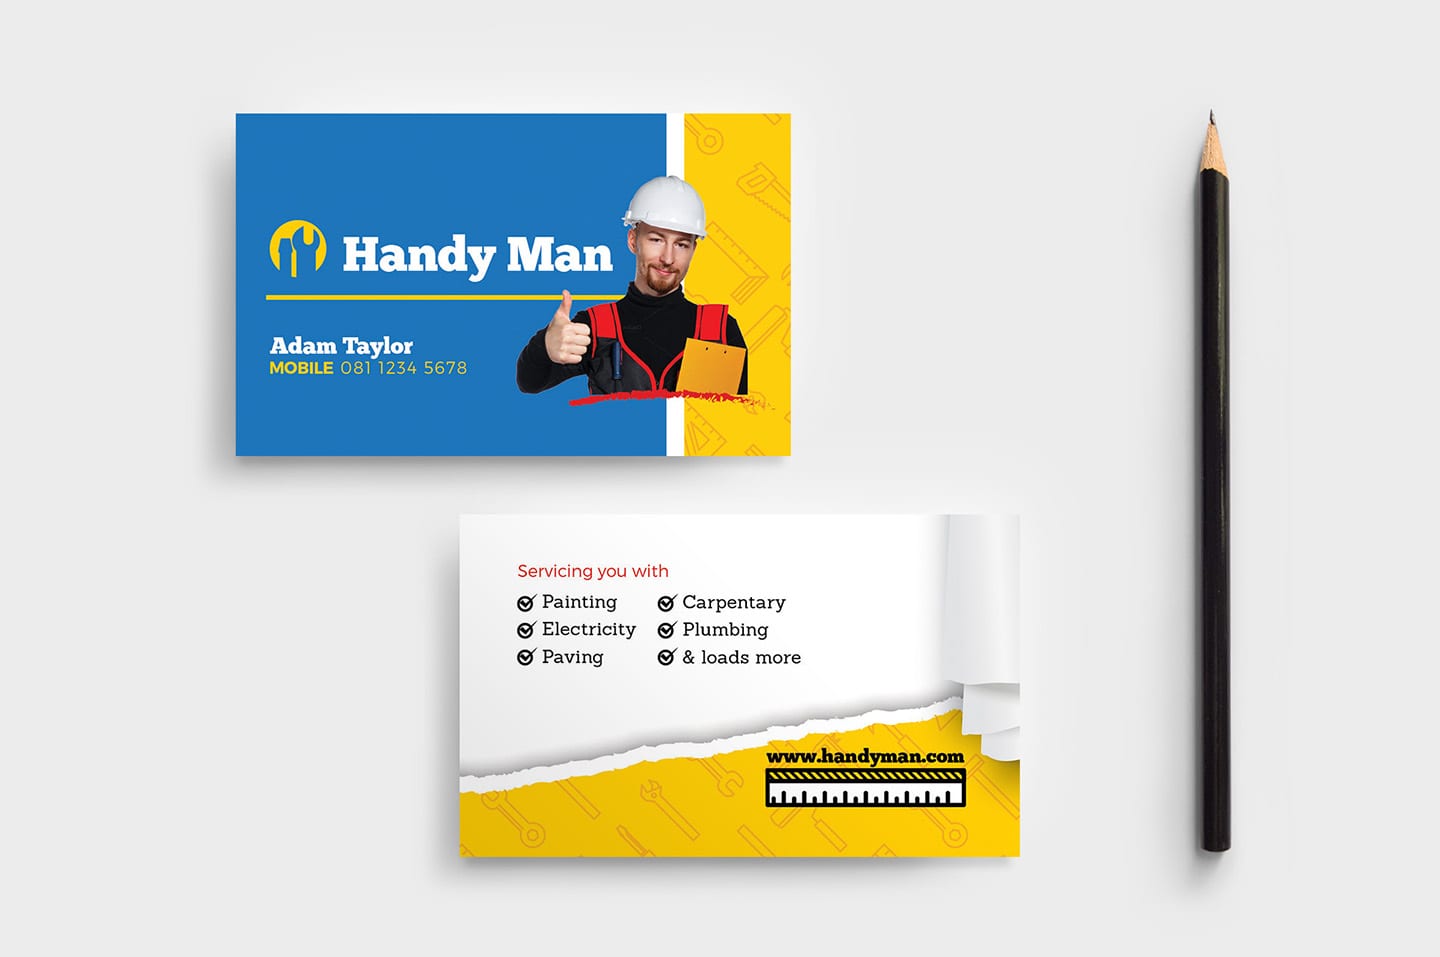 Handyman Business Cards Online / Handyman Business Cards Zazzle